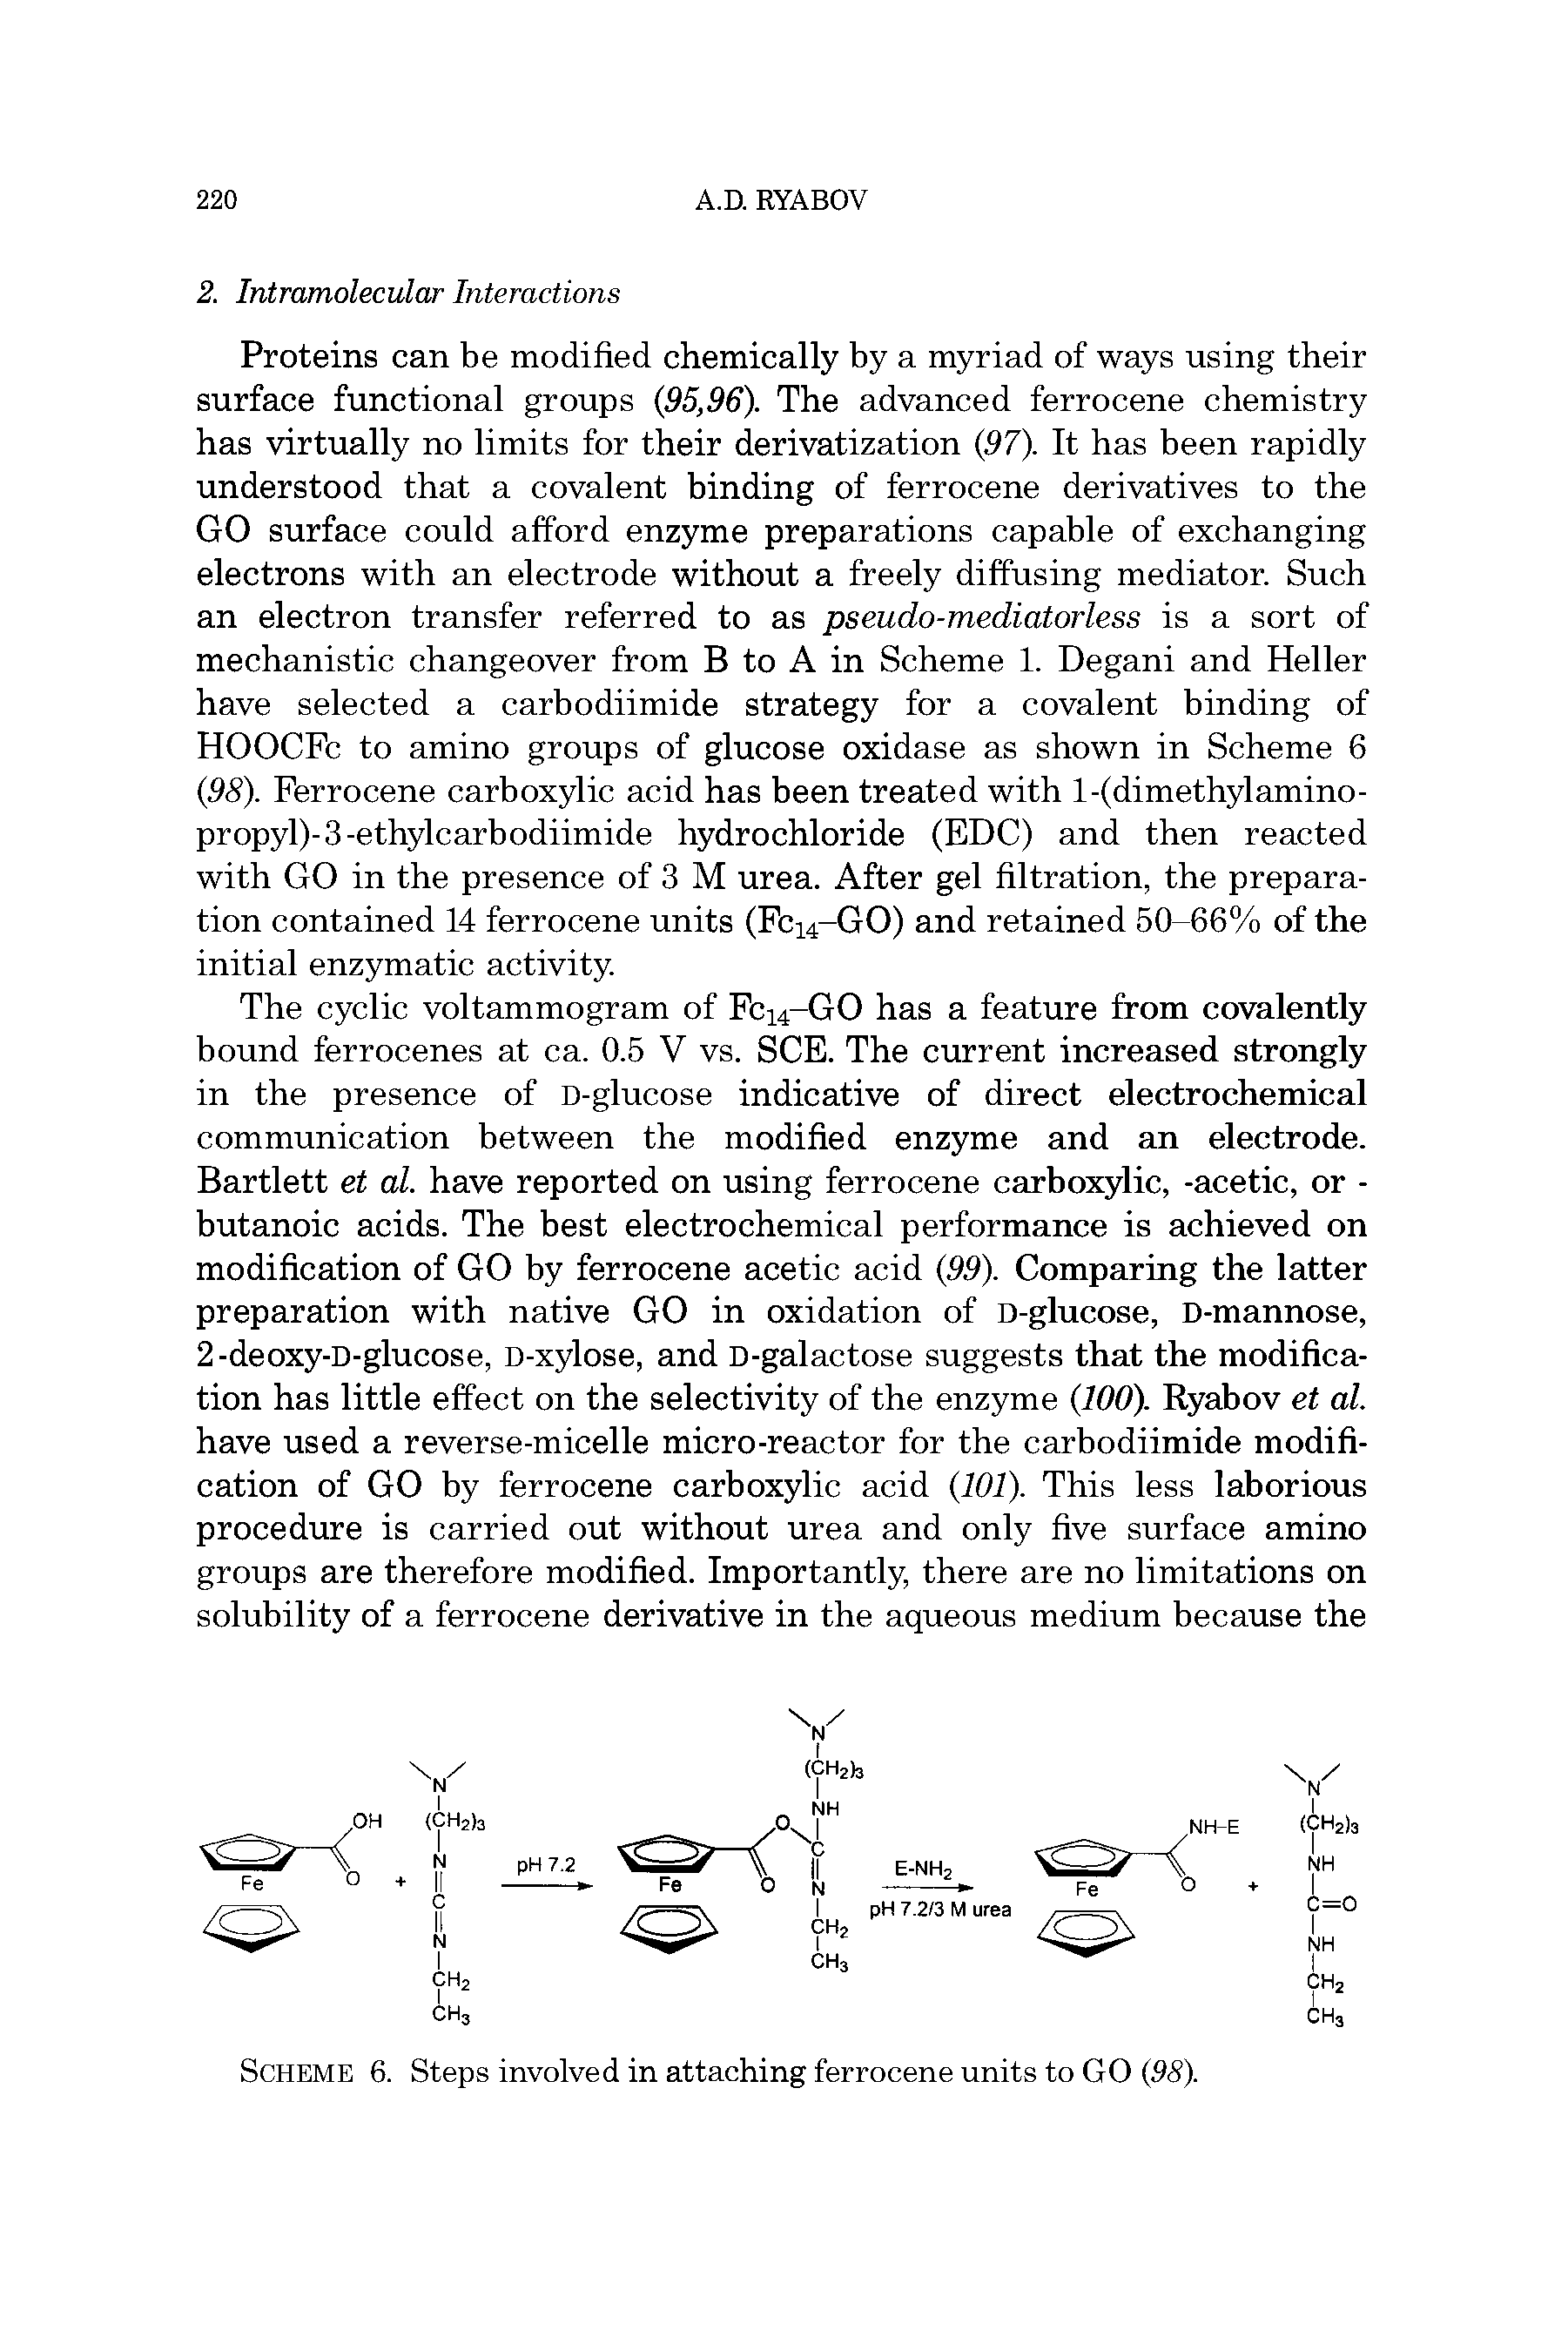 Scheme 6. Steps involved in attaching ferrocene units to GO (98).